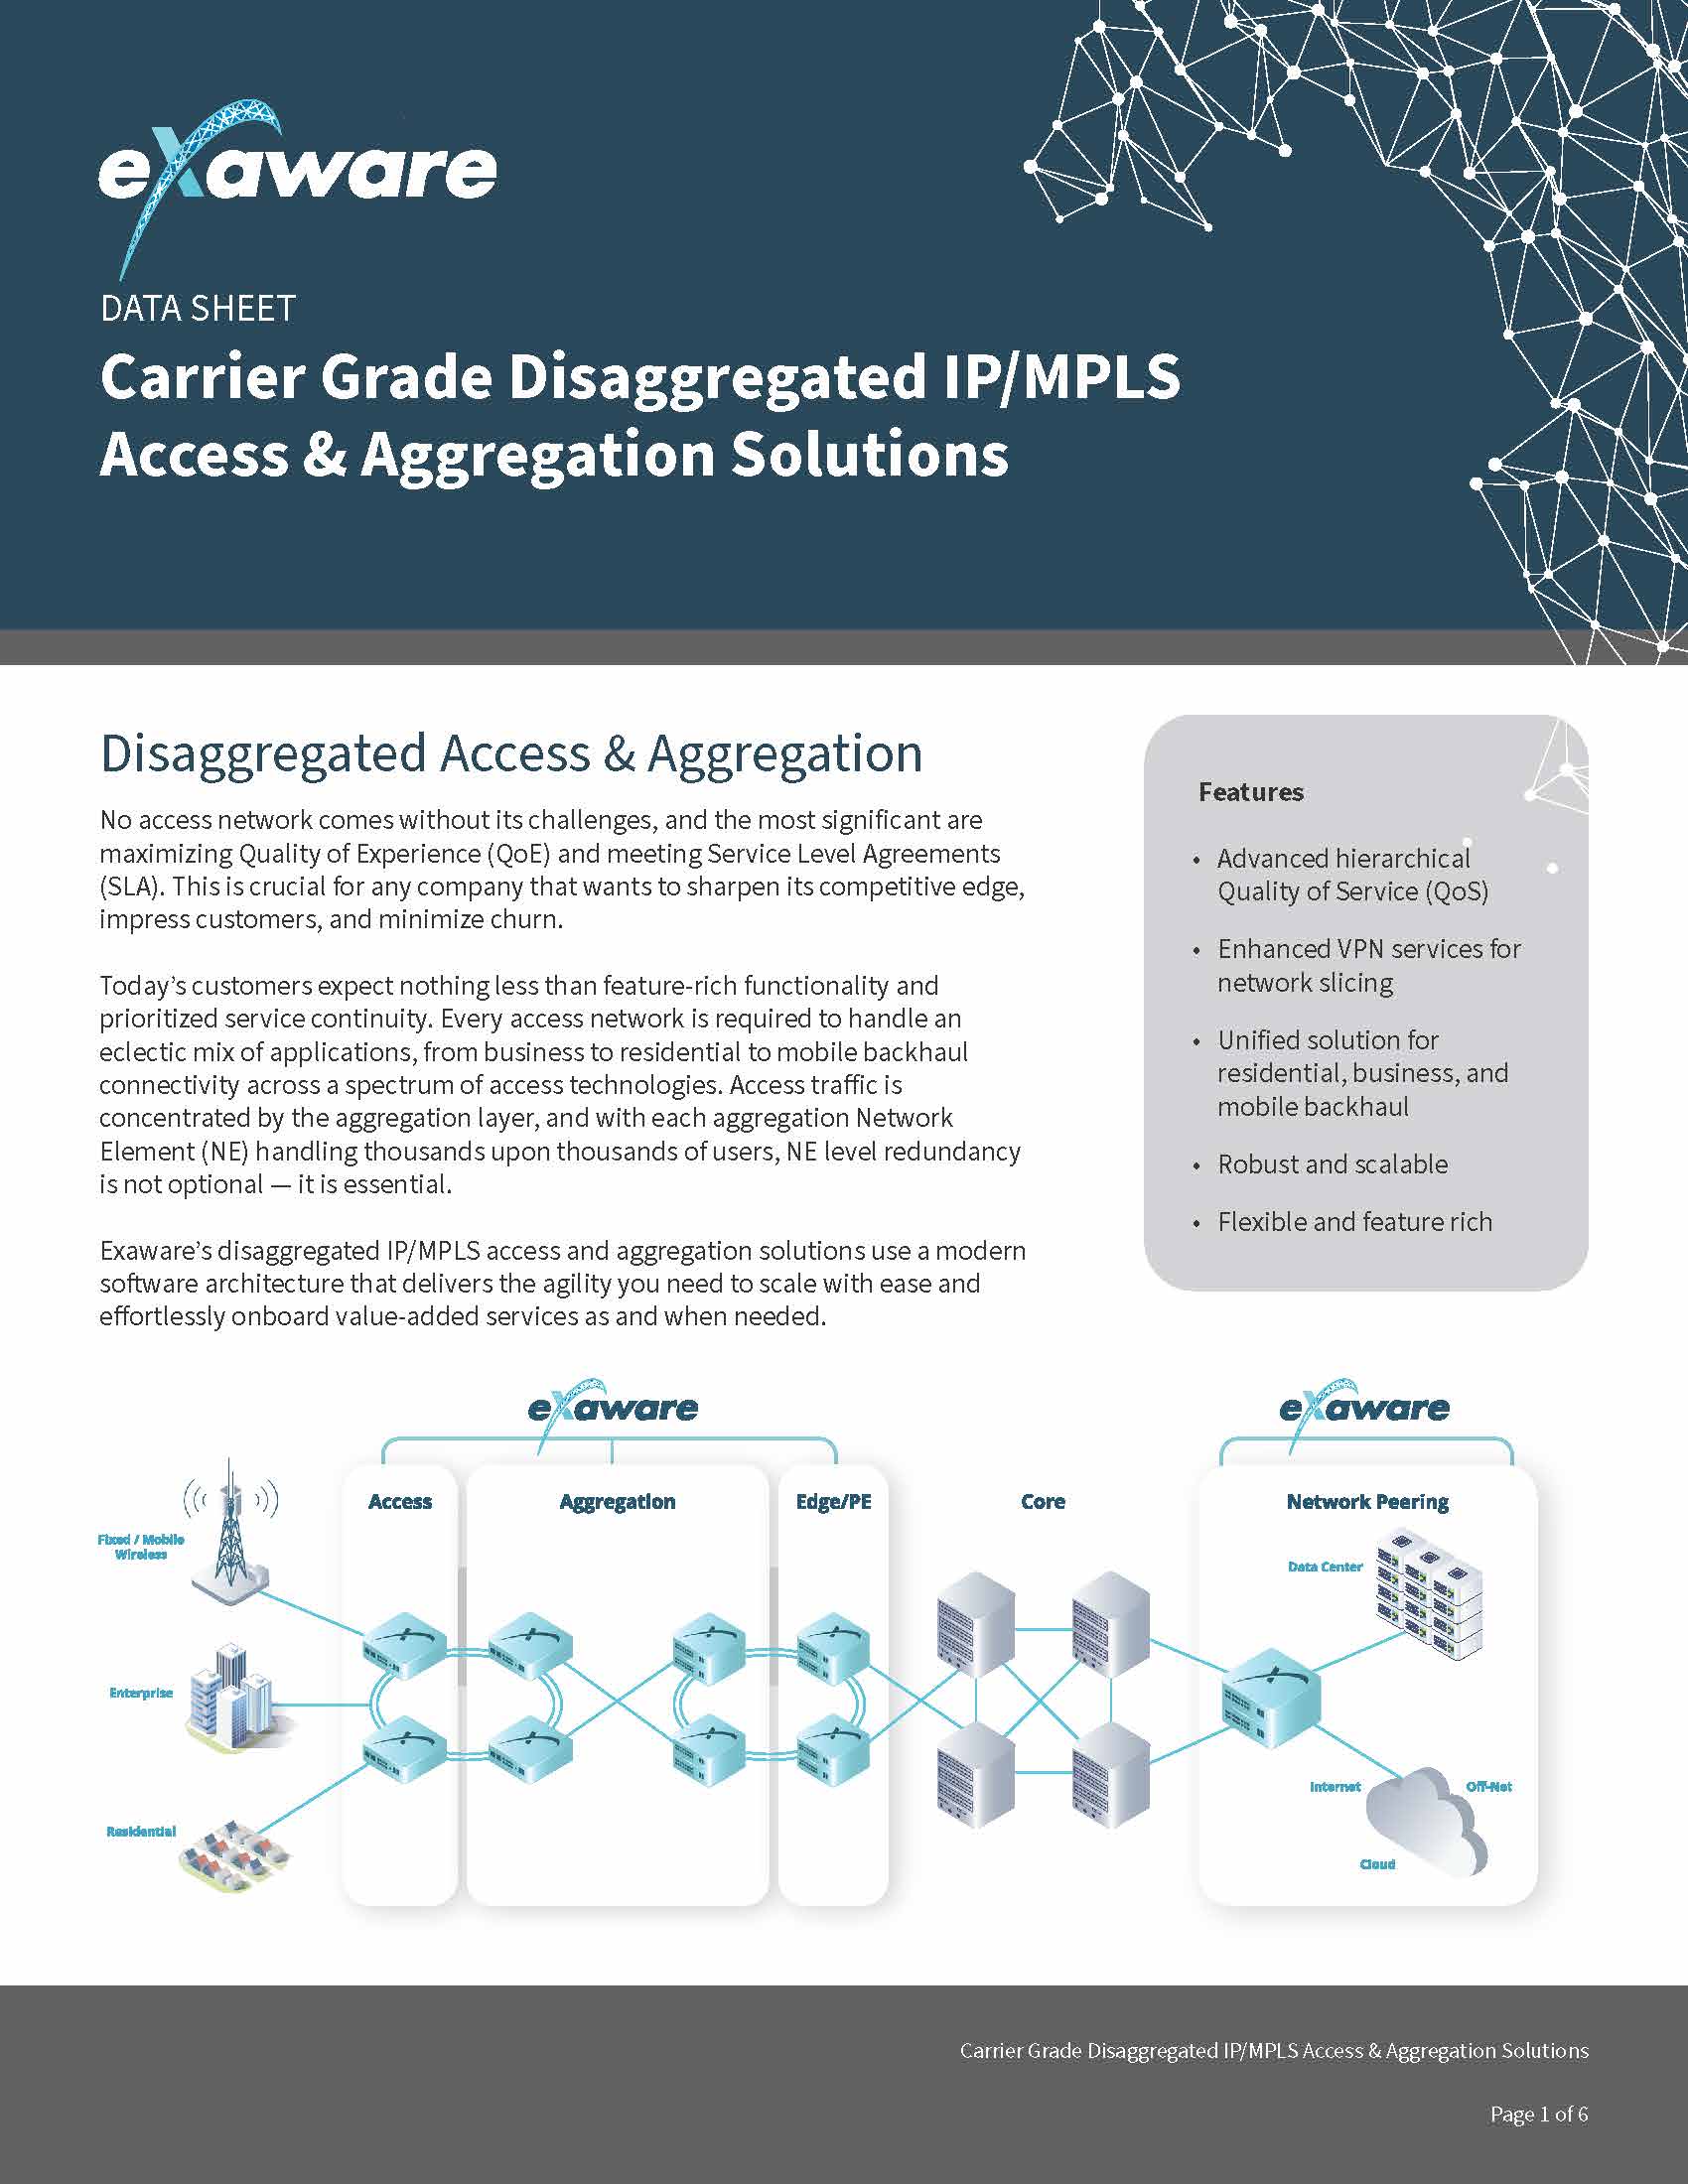 Access & aggregation